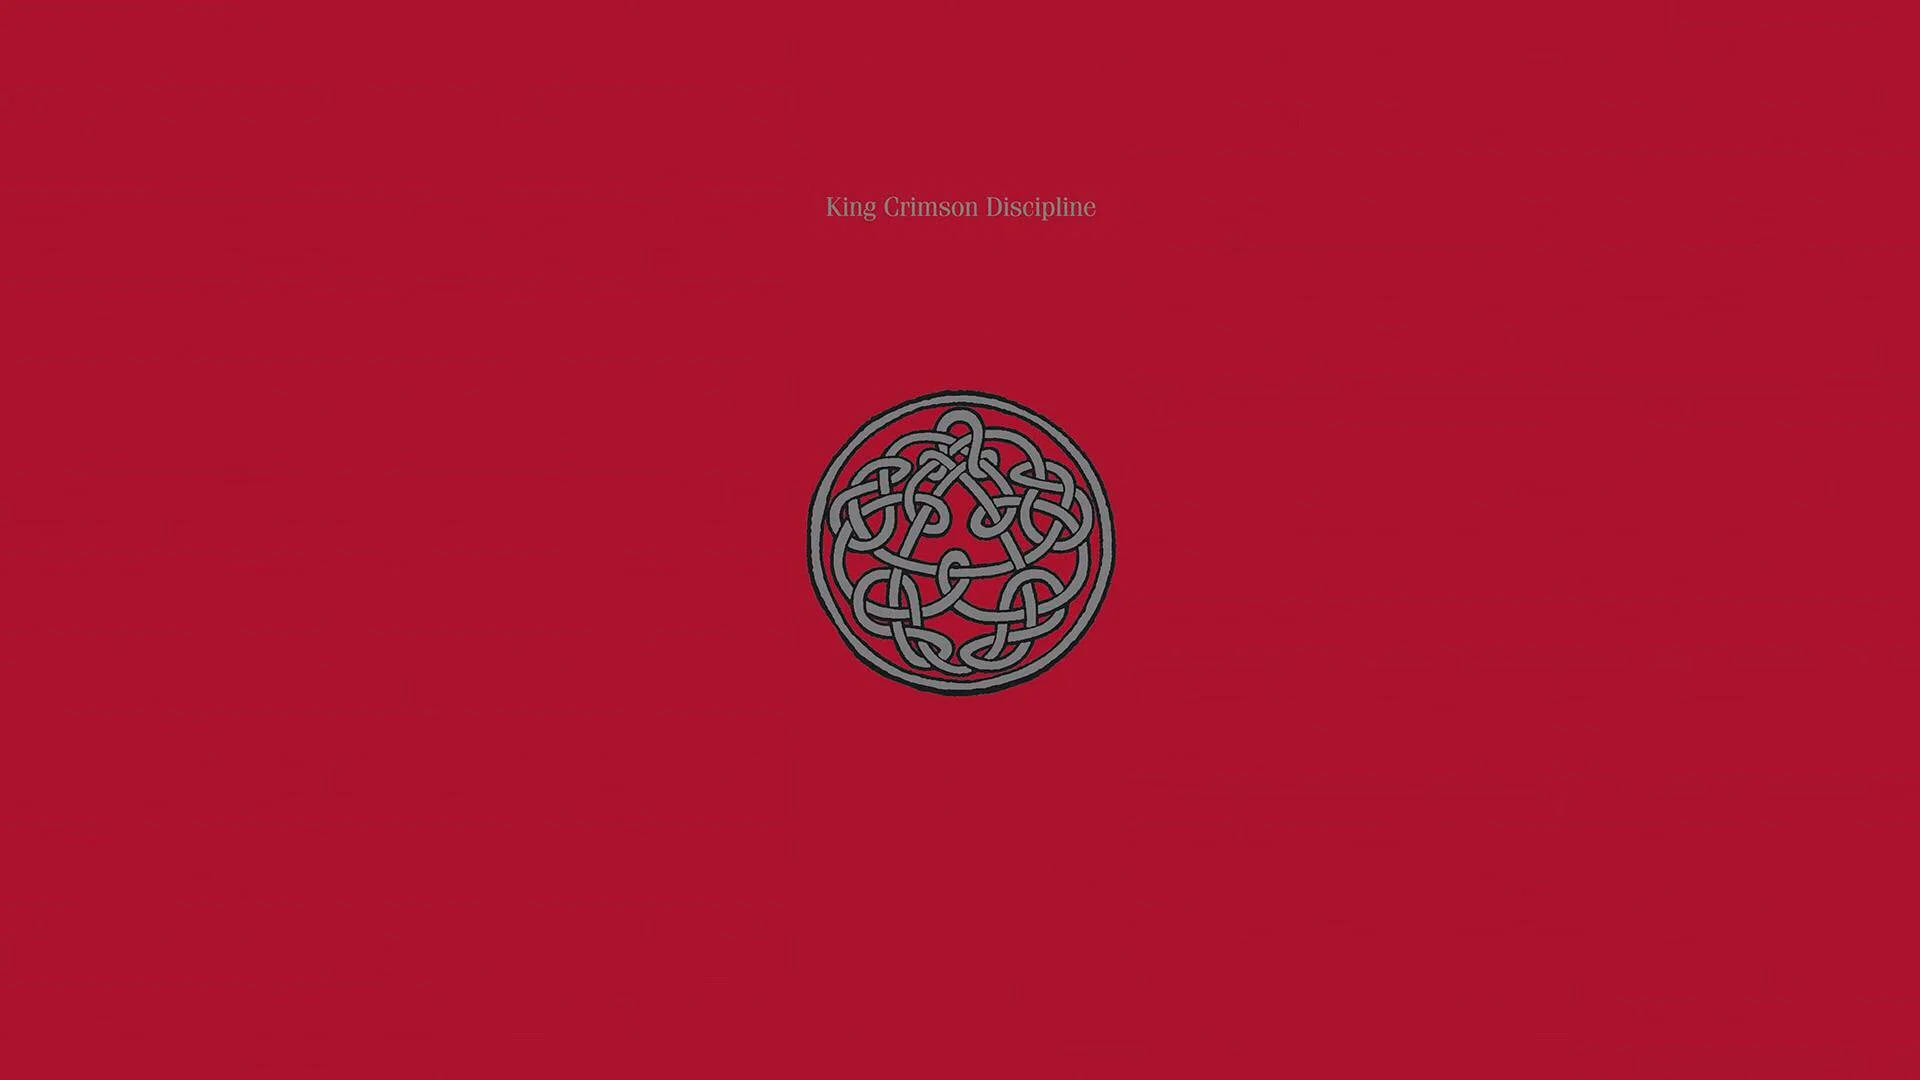 King Crimson Discipline Album Artwork Wallpaper